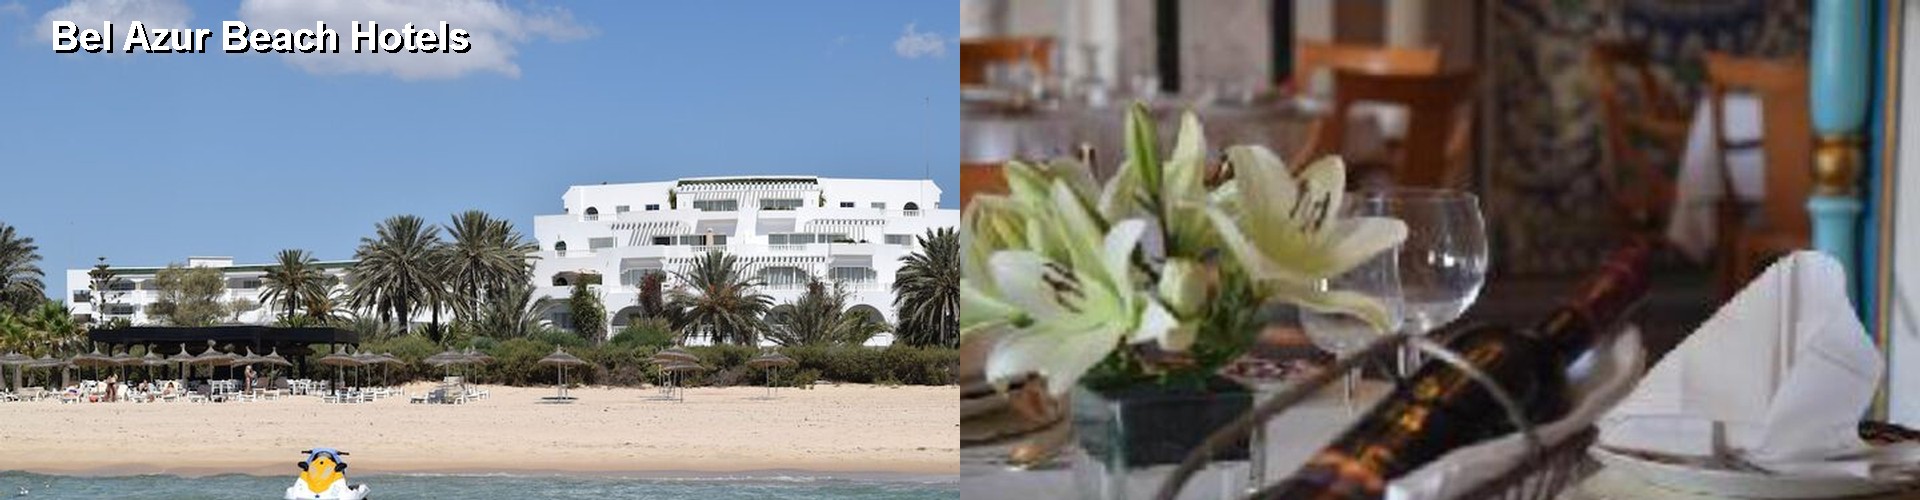 5 Best Hotels near Bel Azur Beach